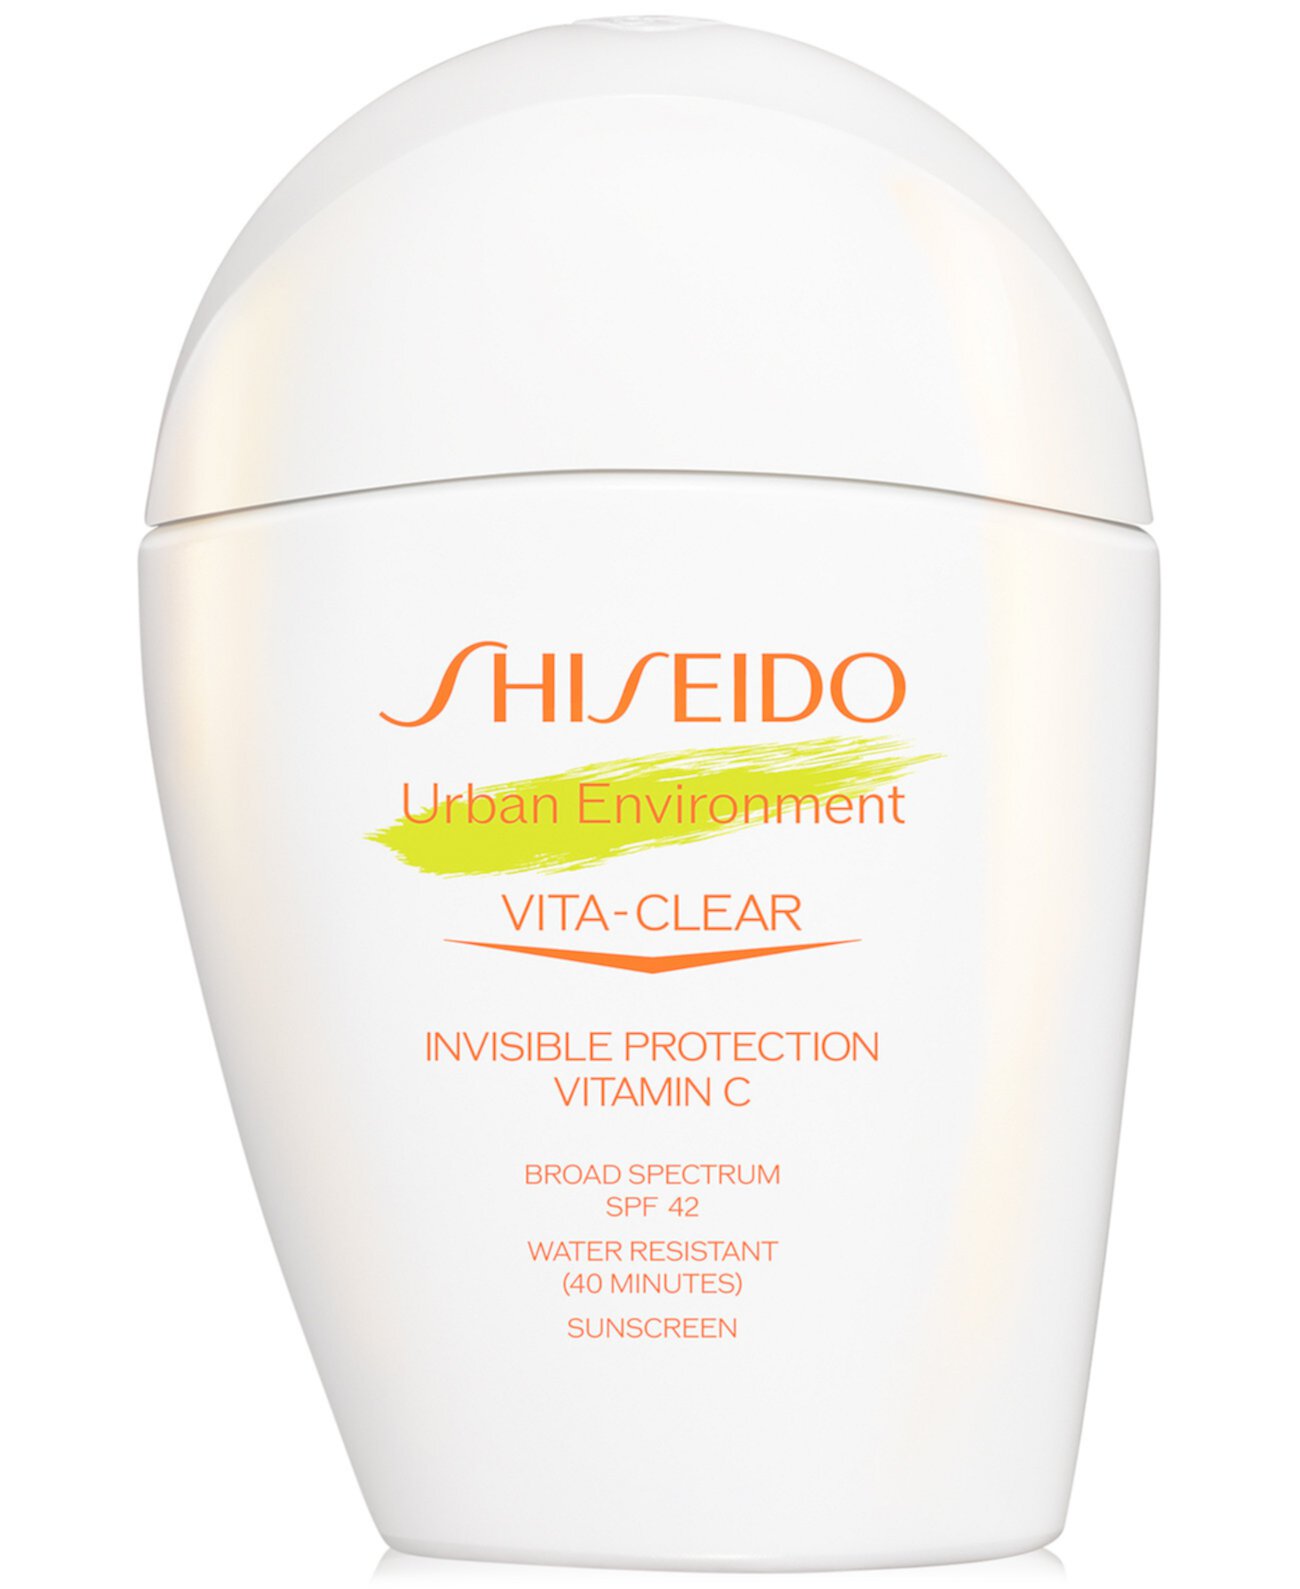 Urban Environment Vita-Clear Солнцезащитный крем SPF 42, 1 унция. Shiseido